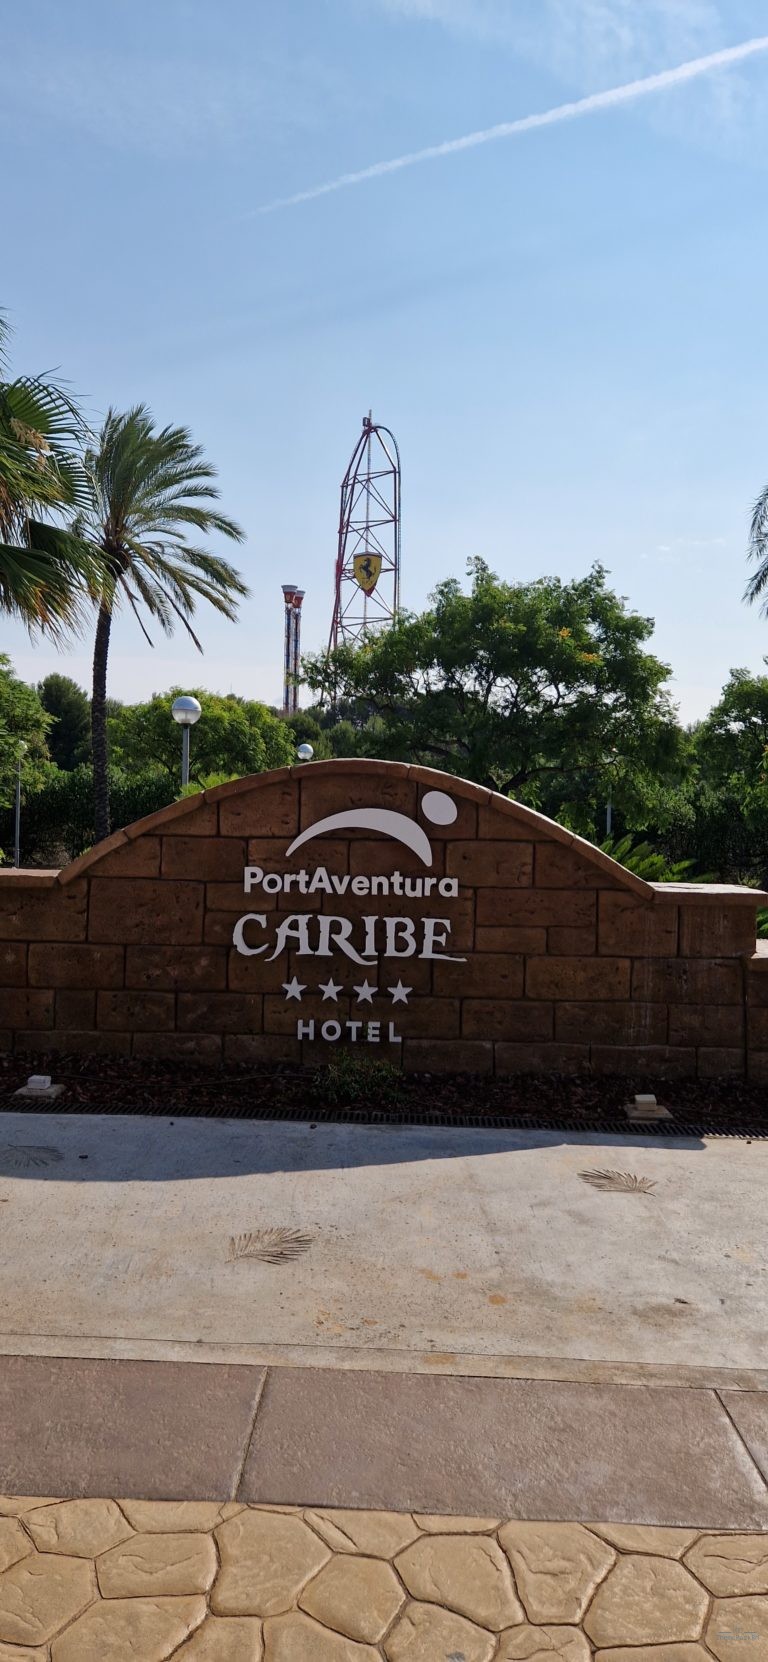 PortAventura Hotel Caribe Review